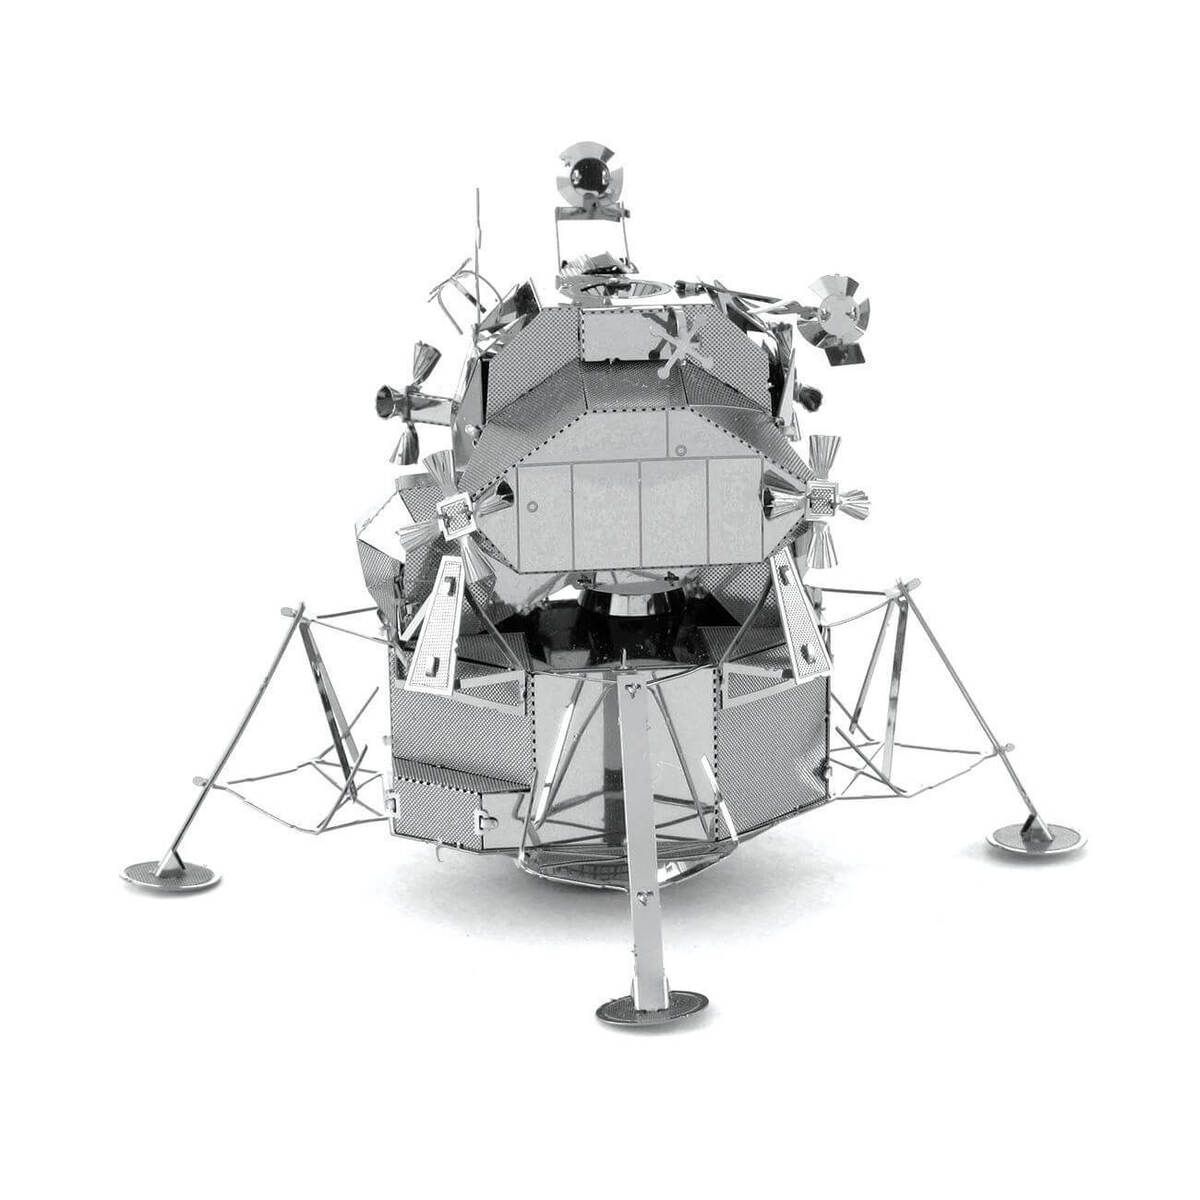 Metal Earth 3D Model Apollo Lunar Module additional image